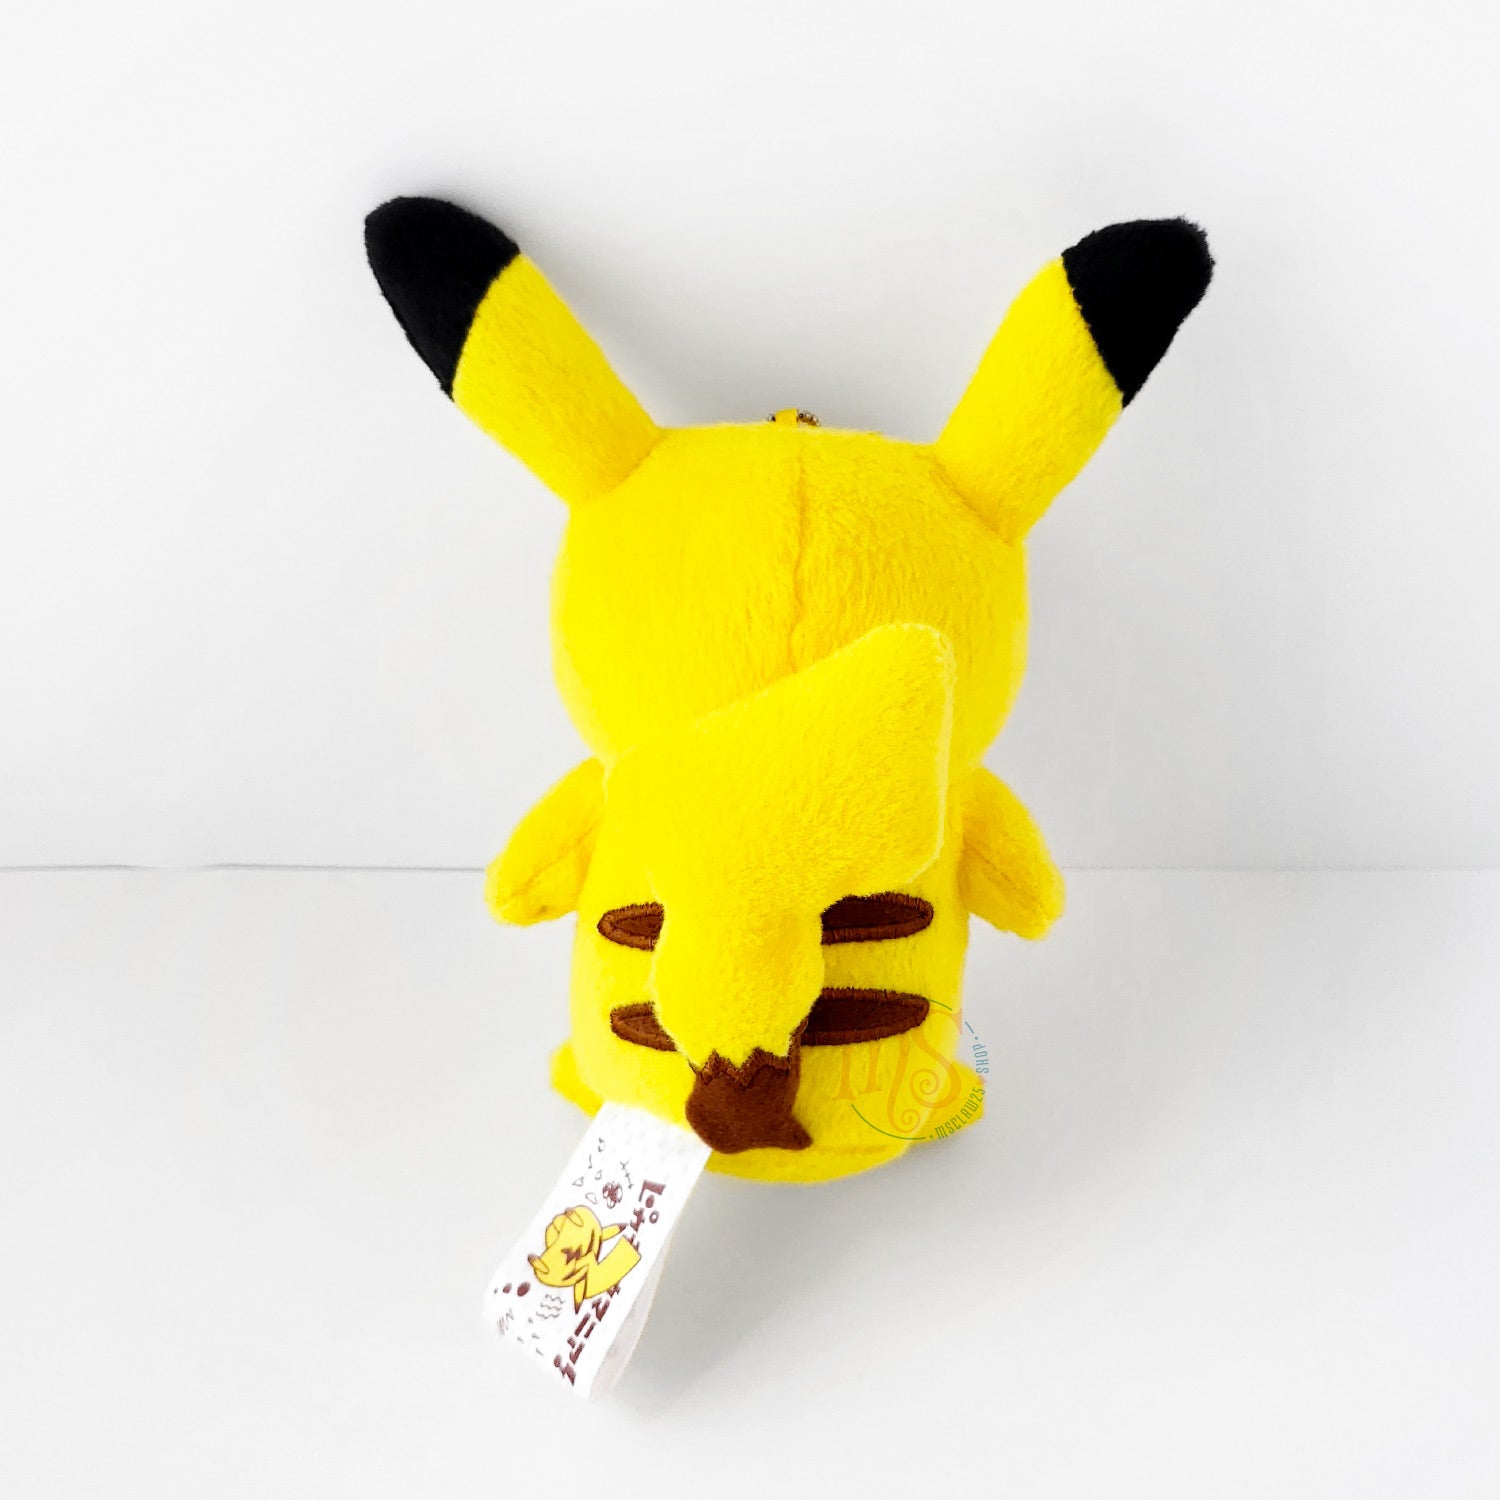 Pokémon Pikachu 😍🔥🔥, Tamagotchi